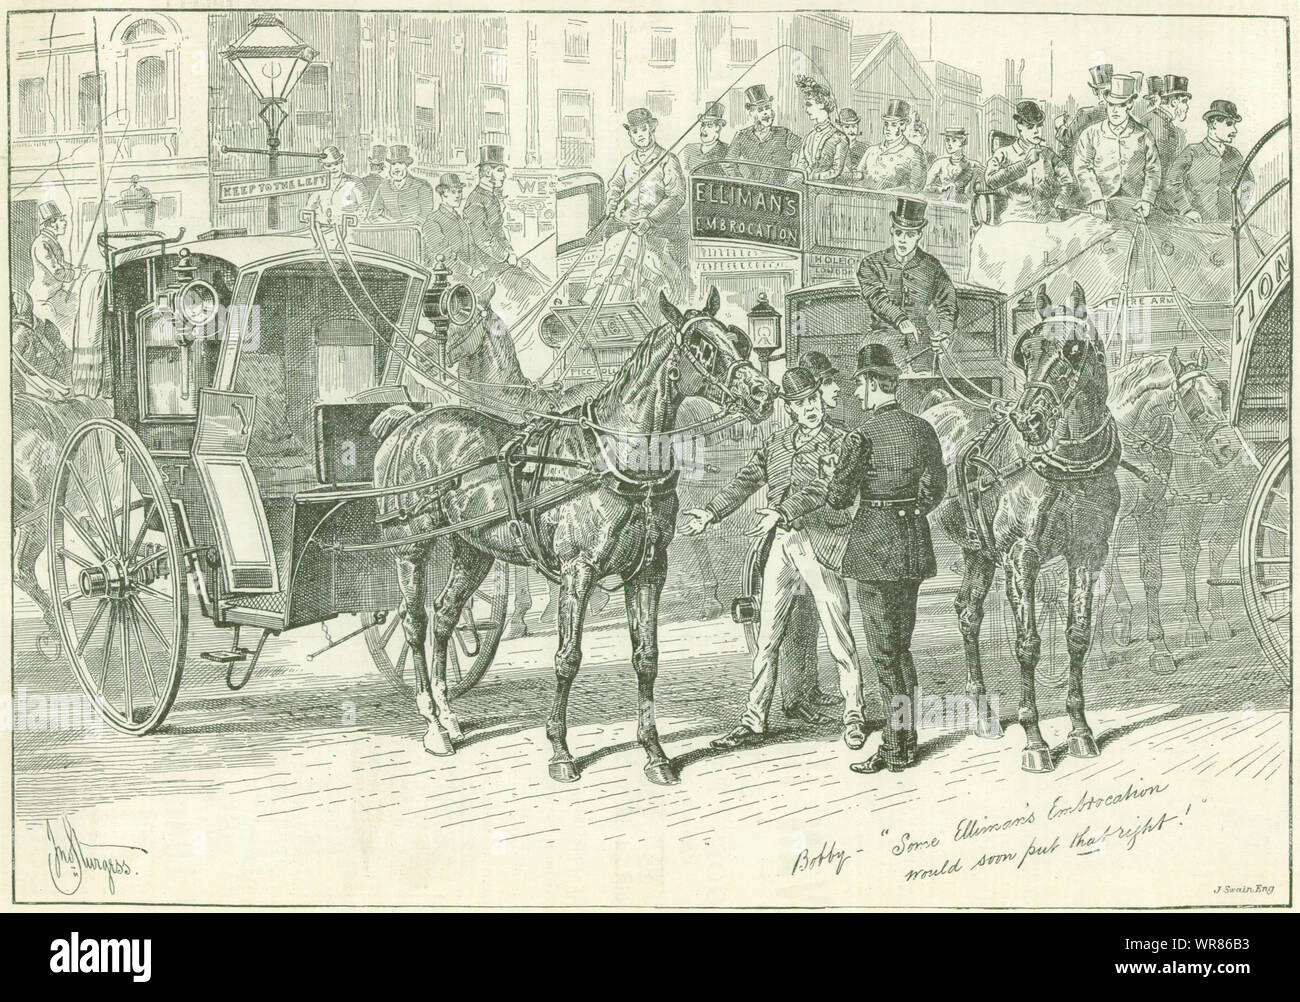 Anzeige. Einige Elliman Embrocation würde bald, rechts. Slough Pferd 1888 Stockfoto